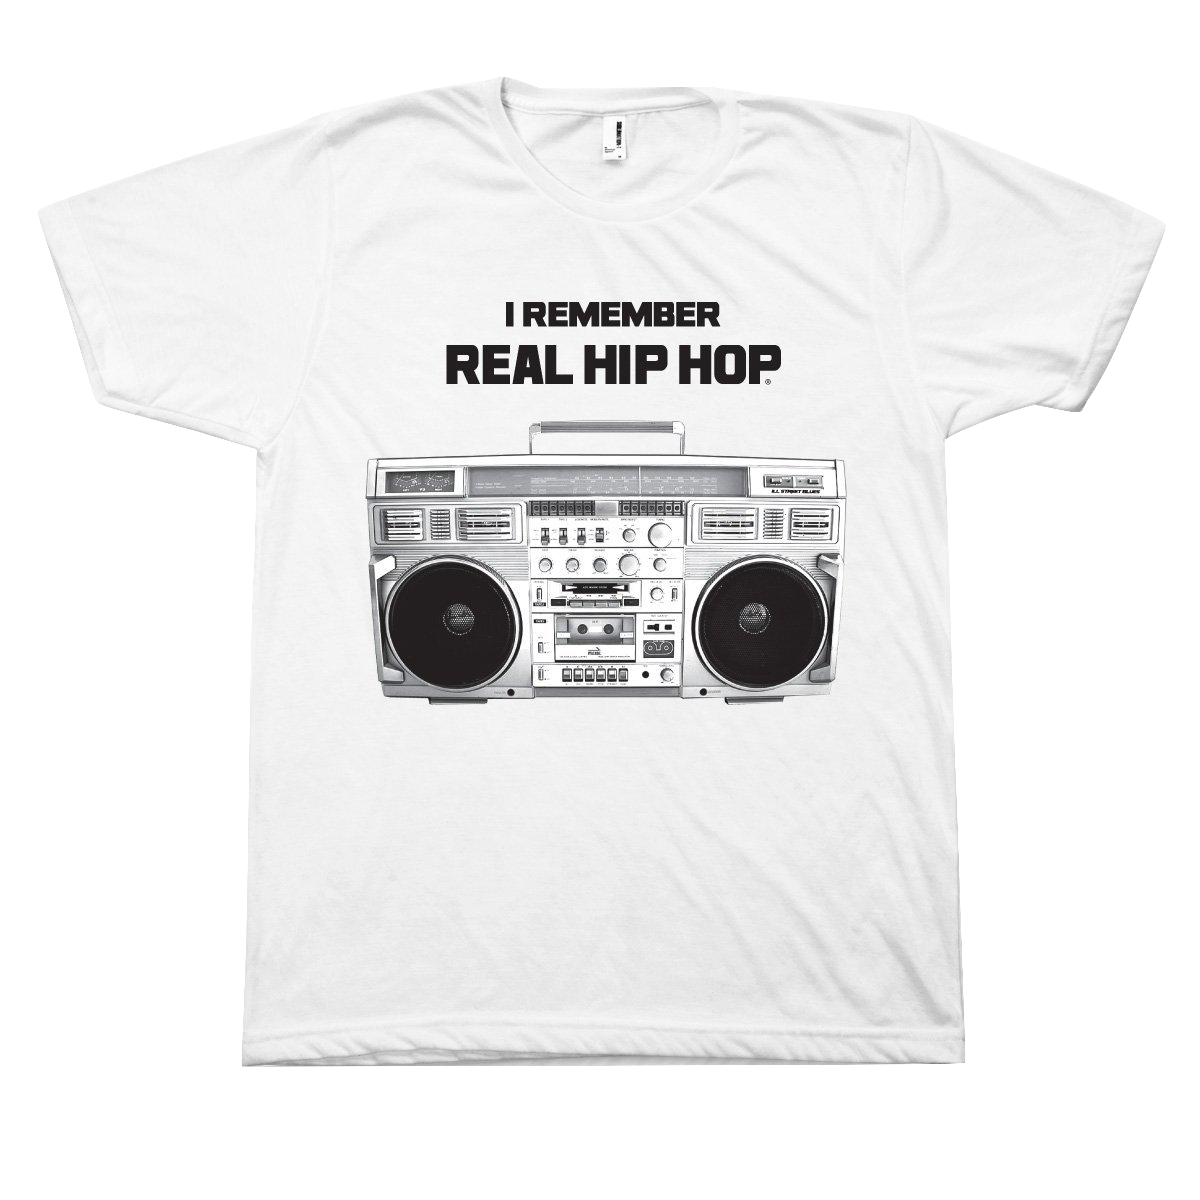 I Remember Real Hip Hop T-Shirt - White